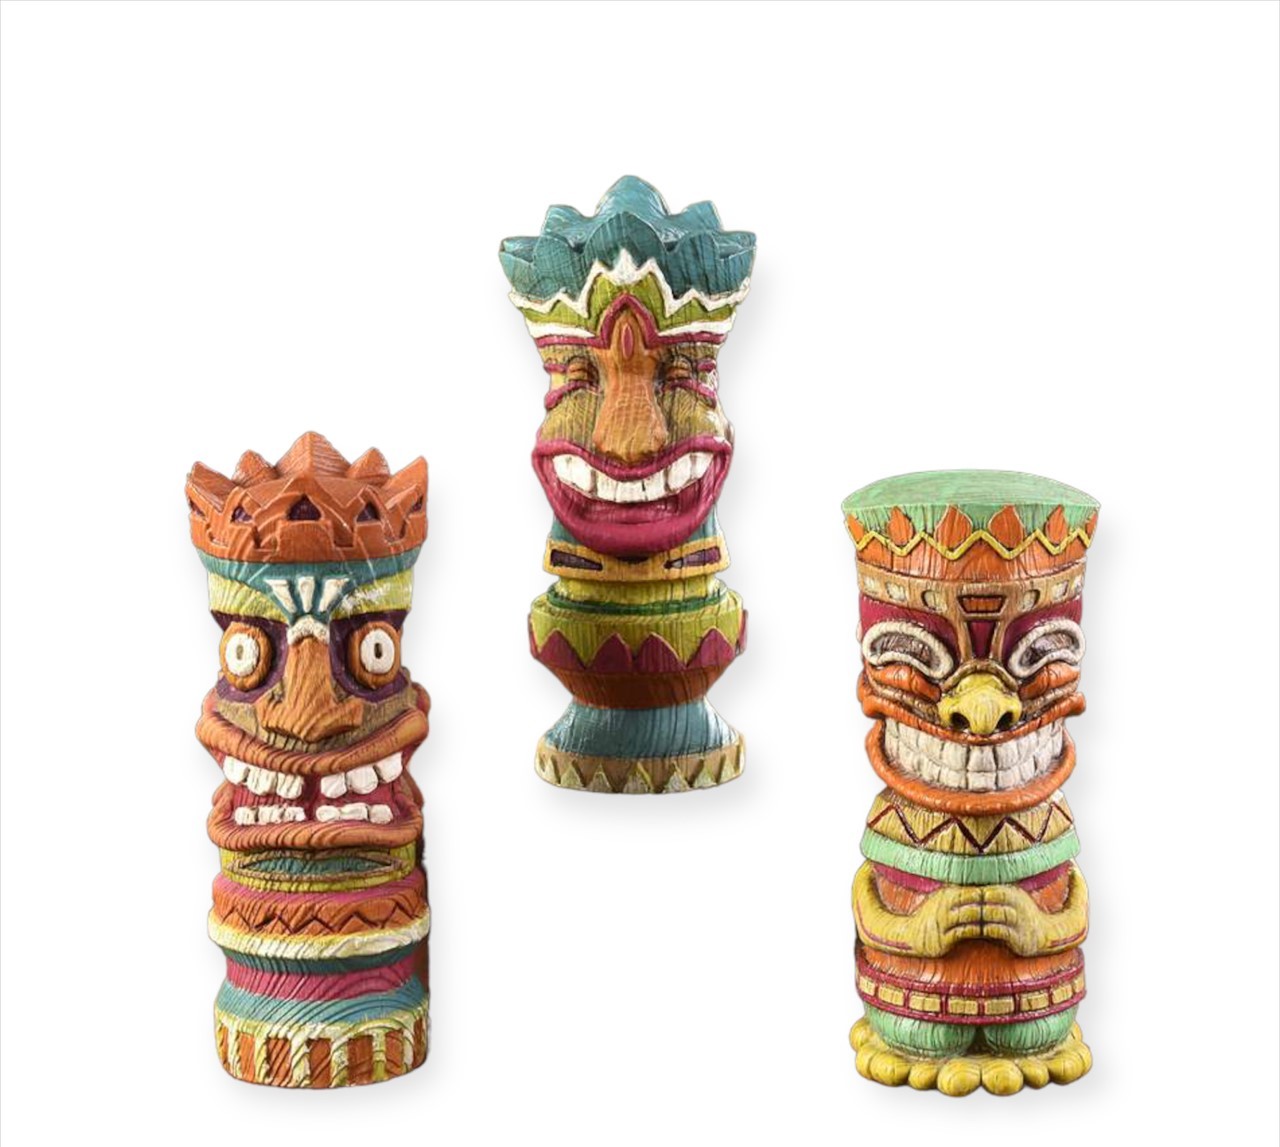 Totem statues